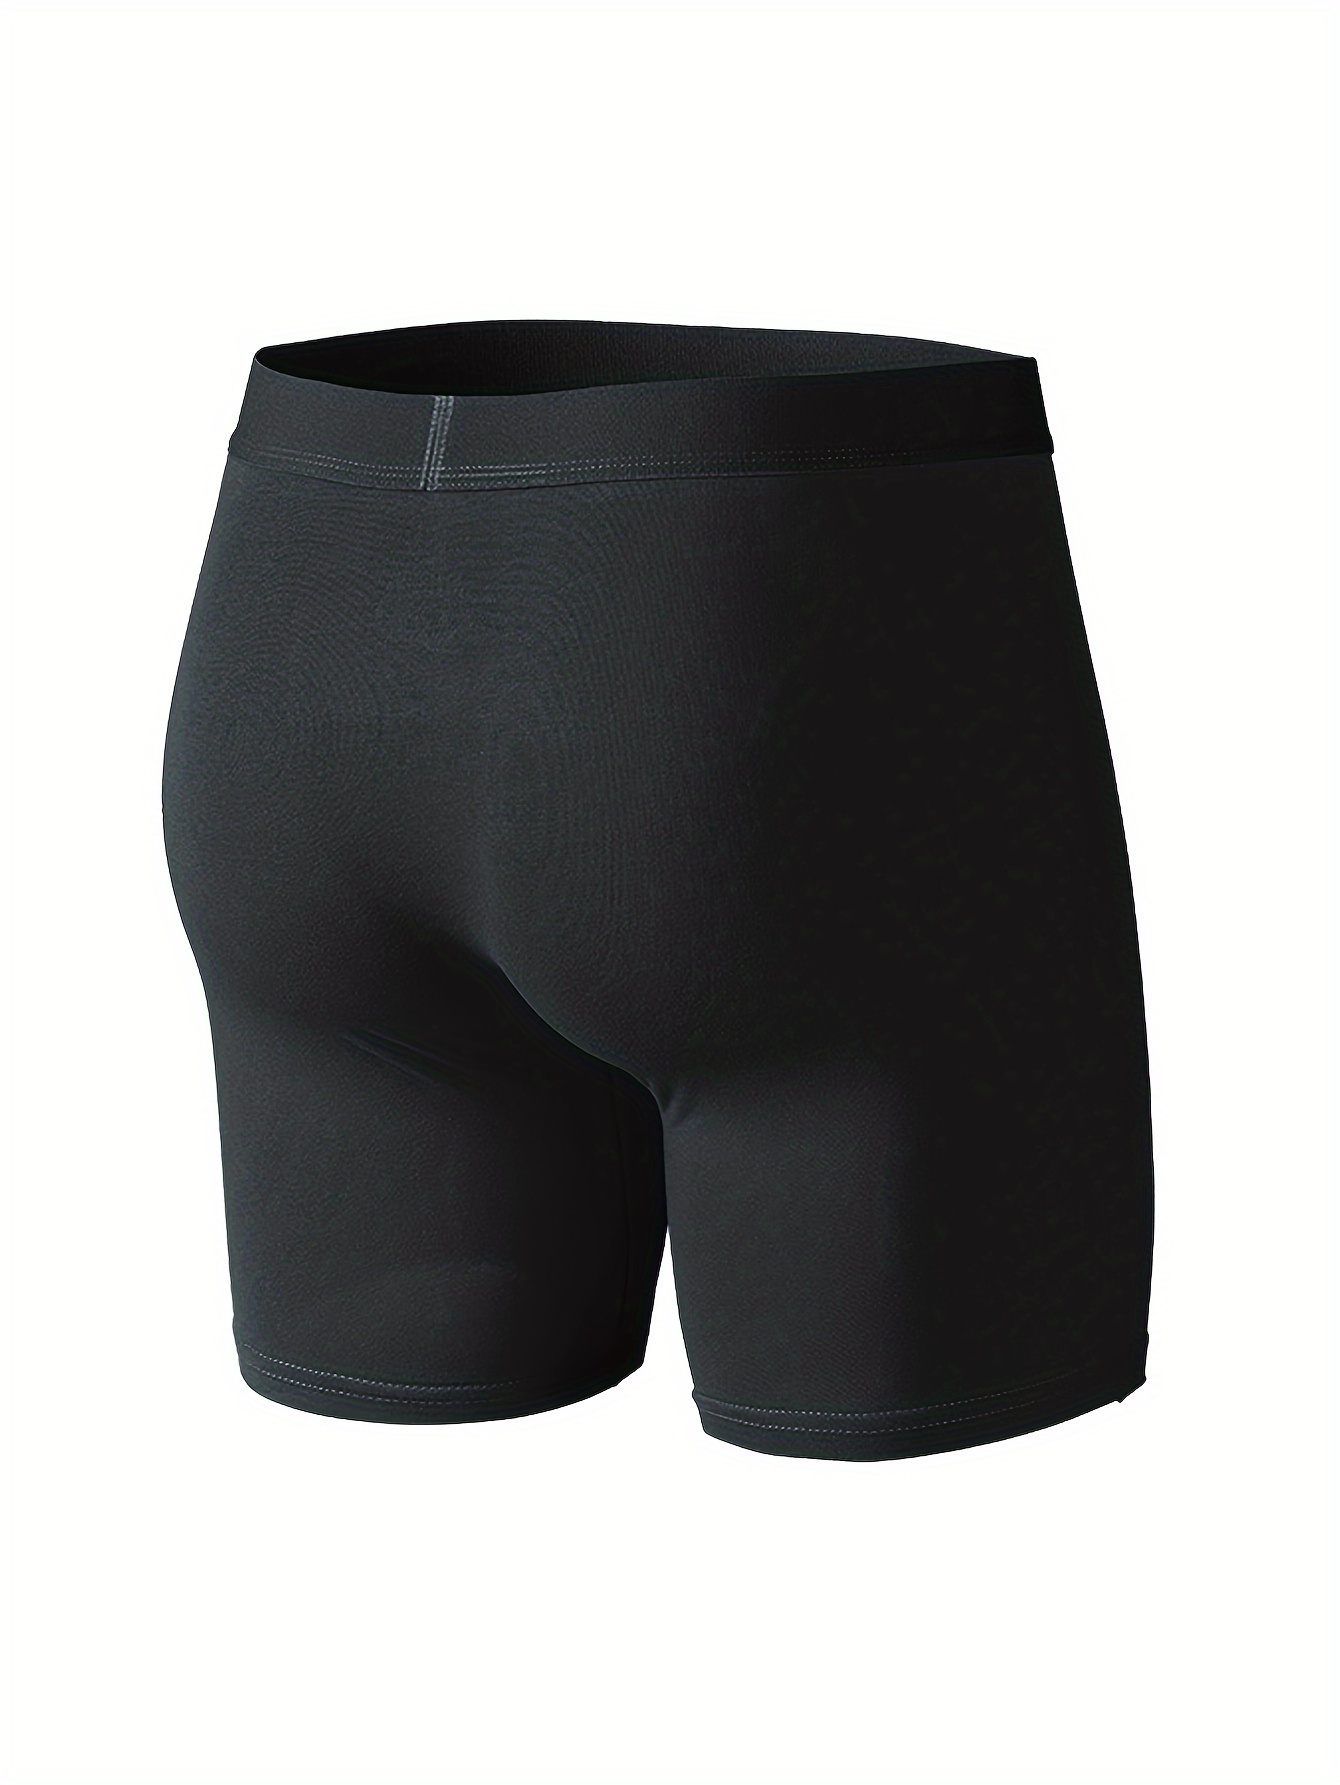 Panties Shorts -  Canada